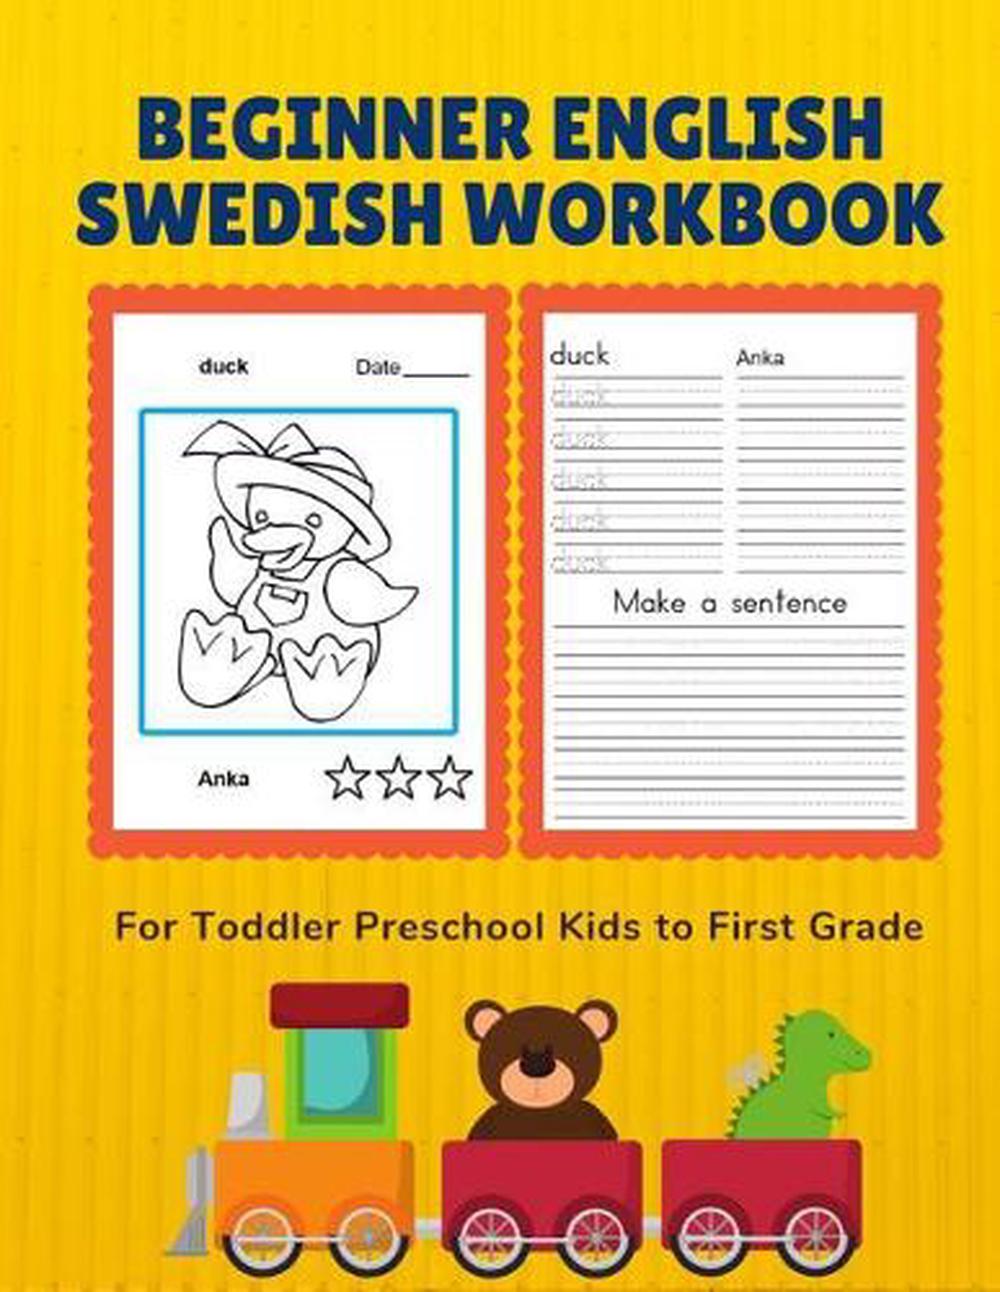 Beginner English Swedish Workbook for Toddler Preschool Kids to First